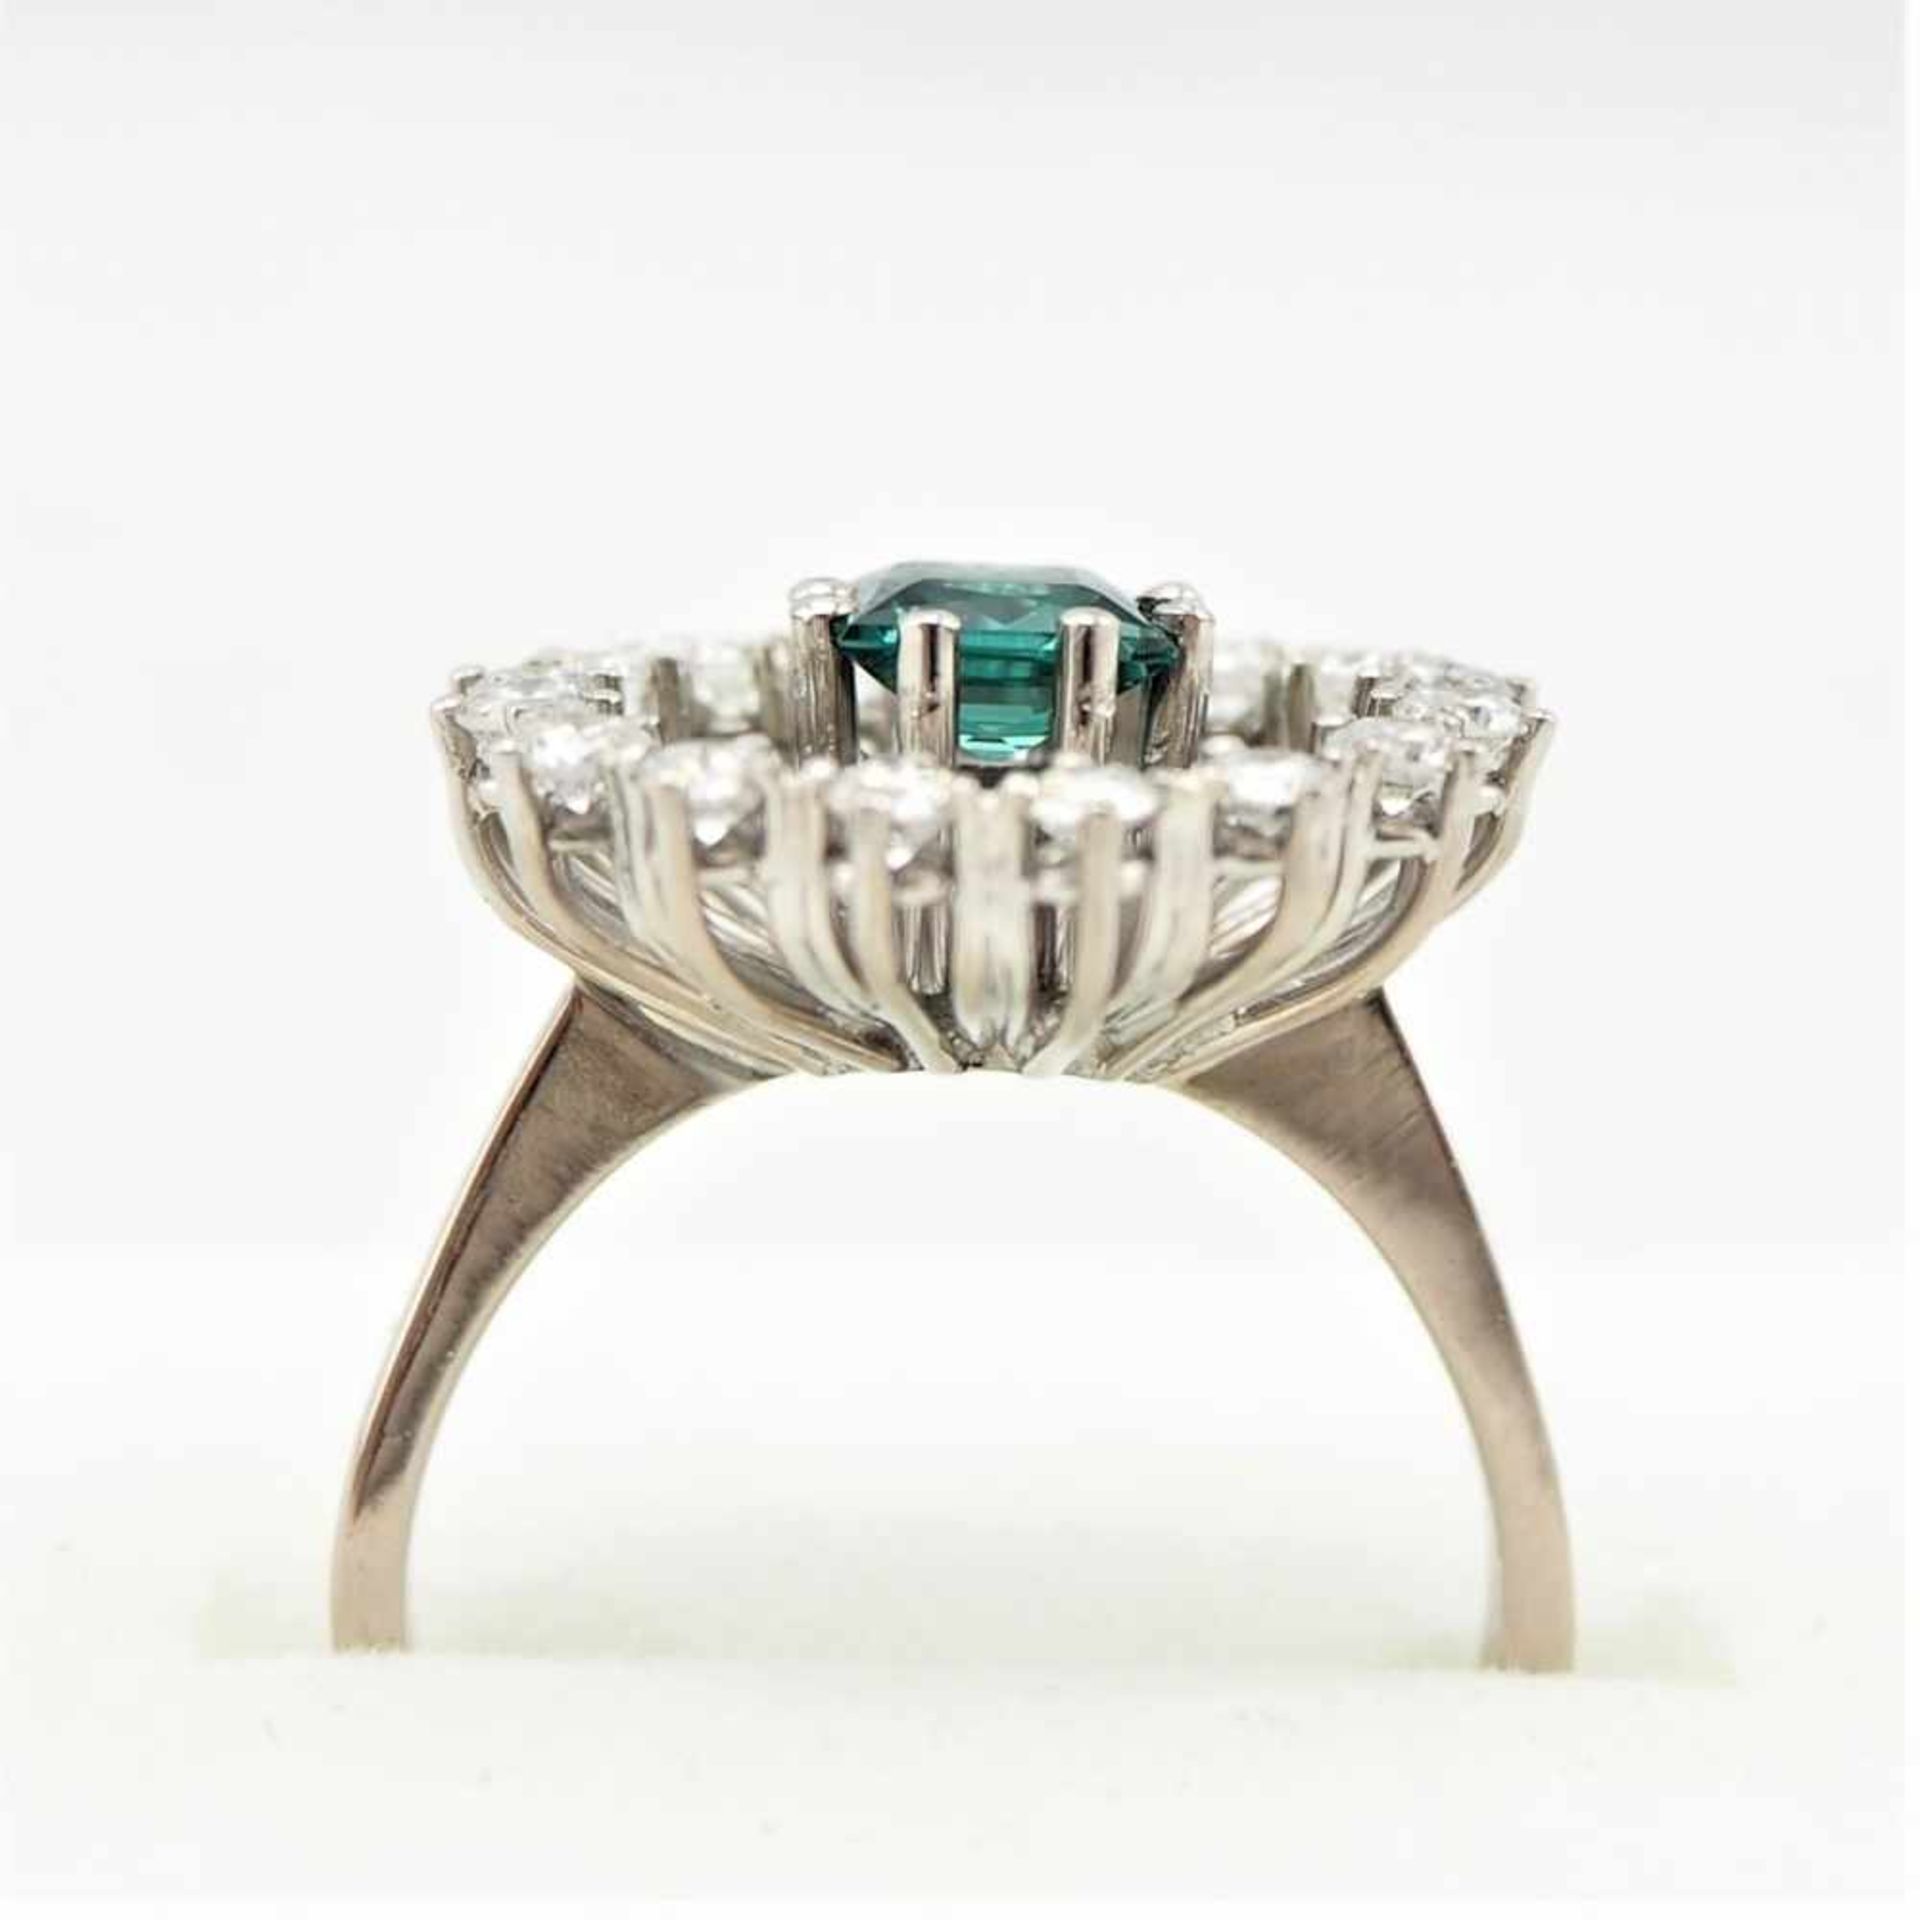 Brillant, Diamant "Halo" Damenring in 18 kt Weißgoldmittig sitzender Turmalin, 750er Goldstempel - Image 3 of 3